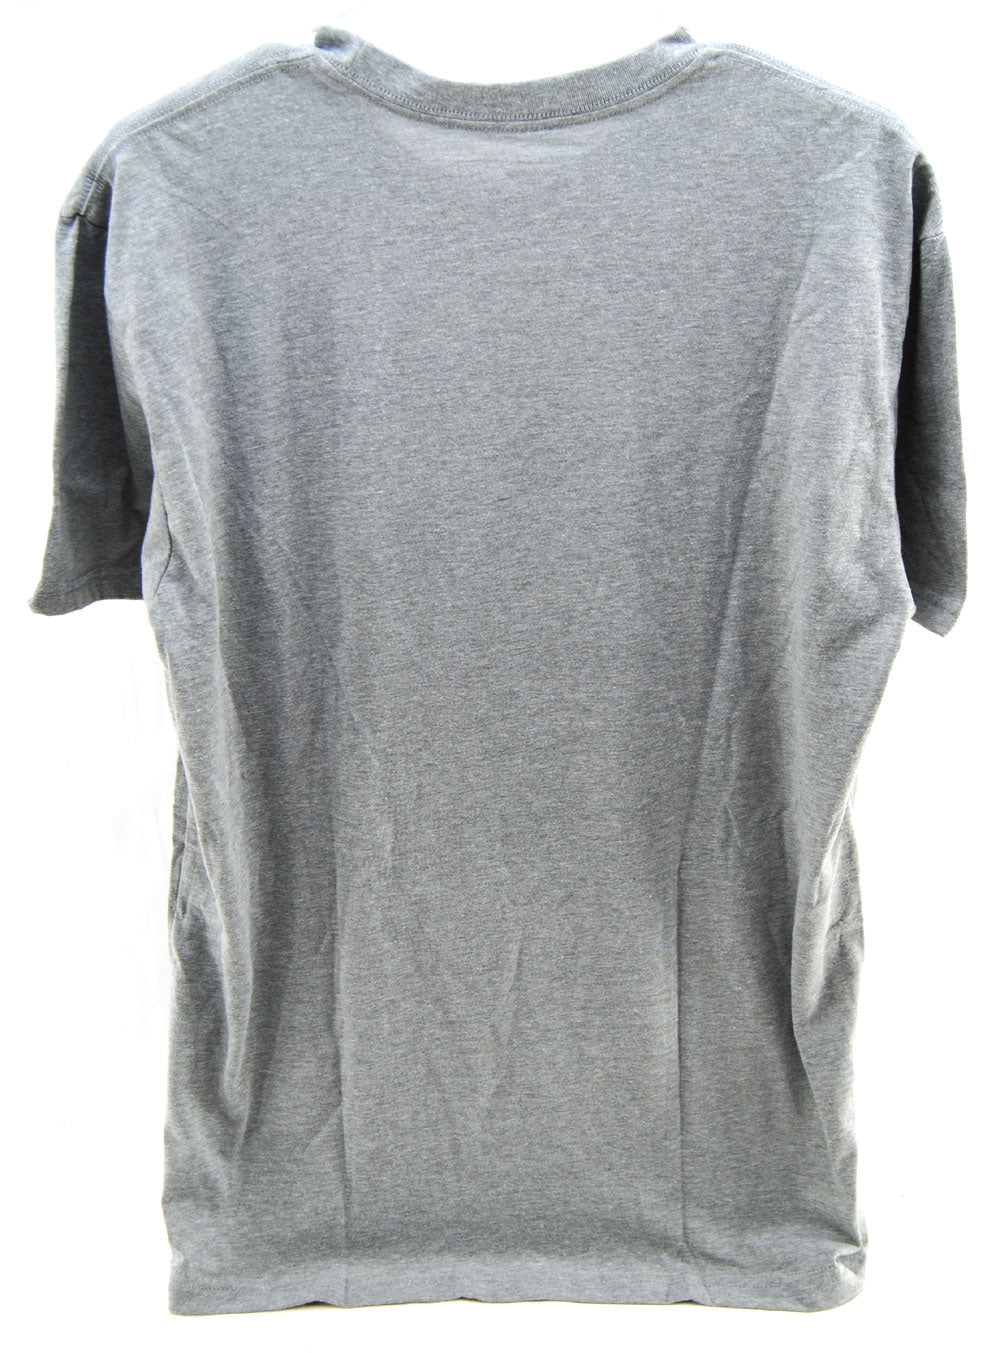 Exalt Paintball Banner T-Shirt Medium - Grey - Exalt